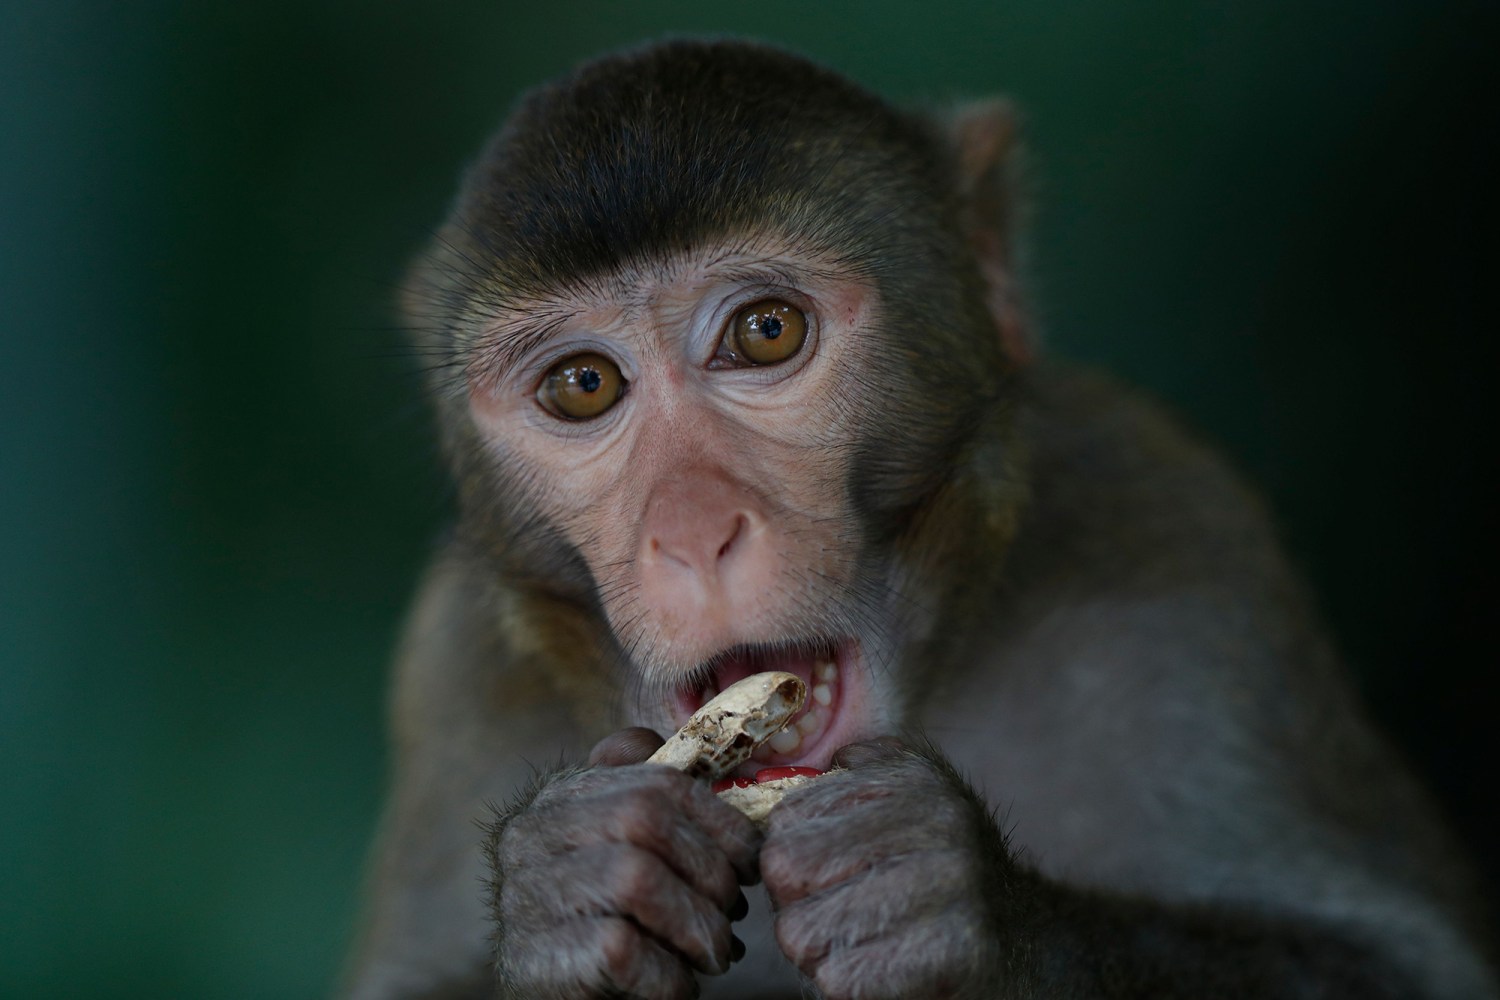 scientists splice human genes into monkey brains to make them bigger, smarter